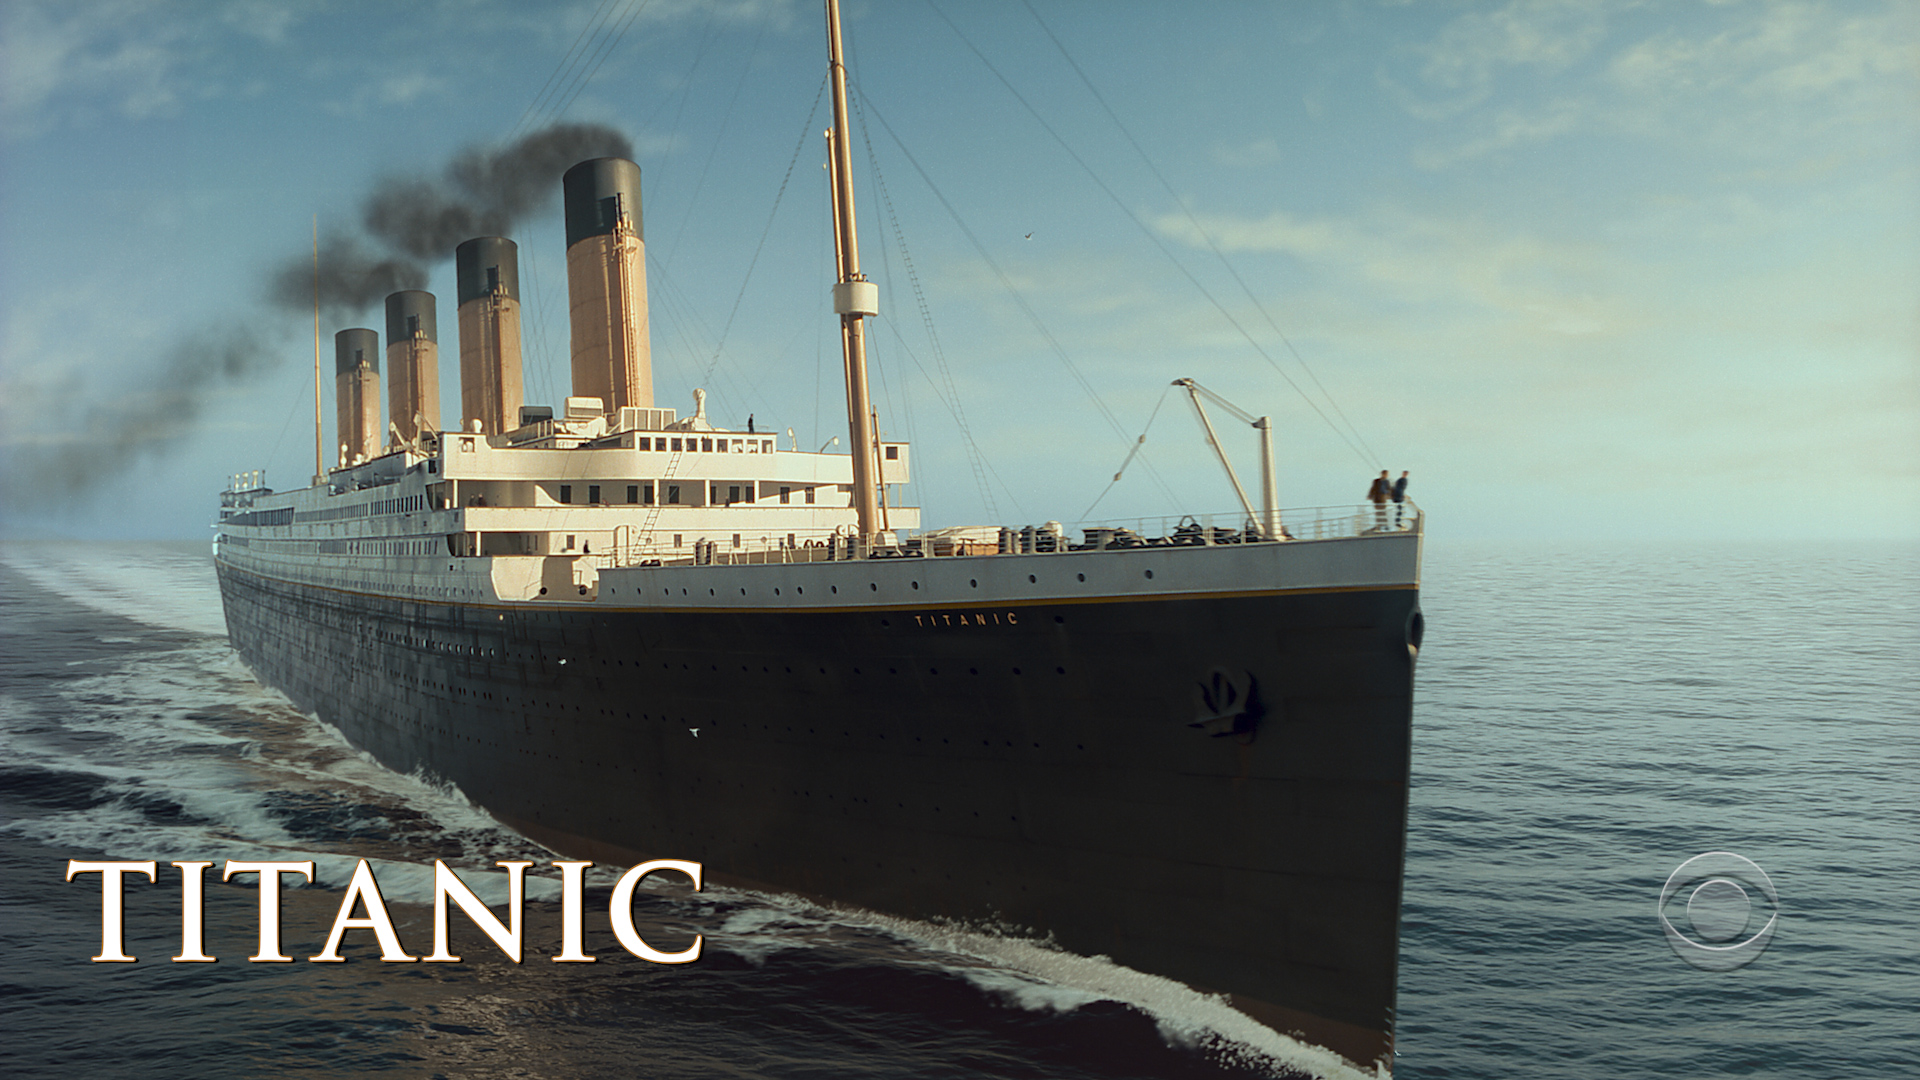 Cbs On Watching Titanic Cbsmovienight With Your Own